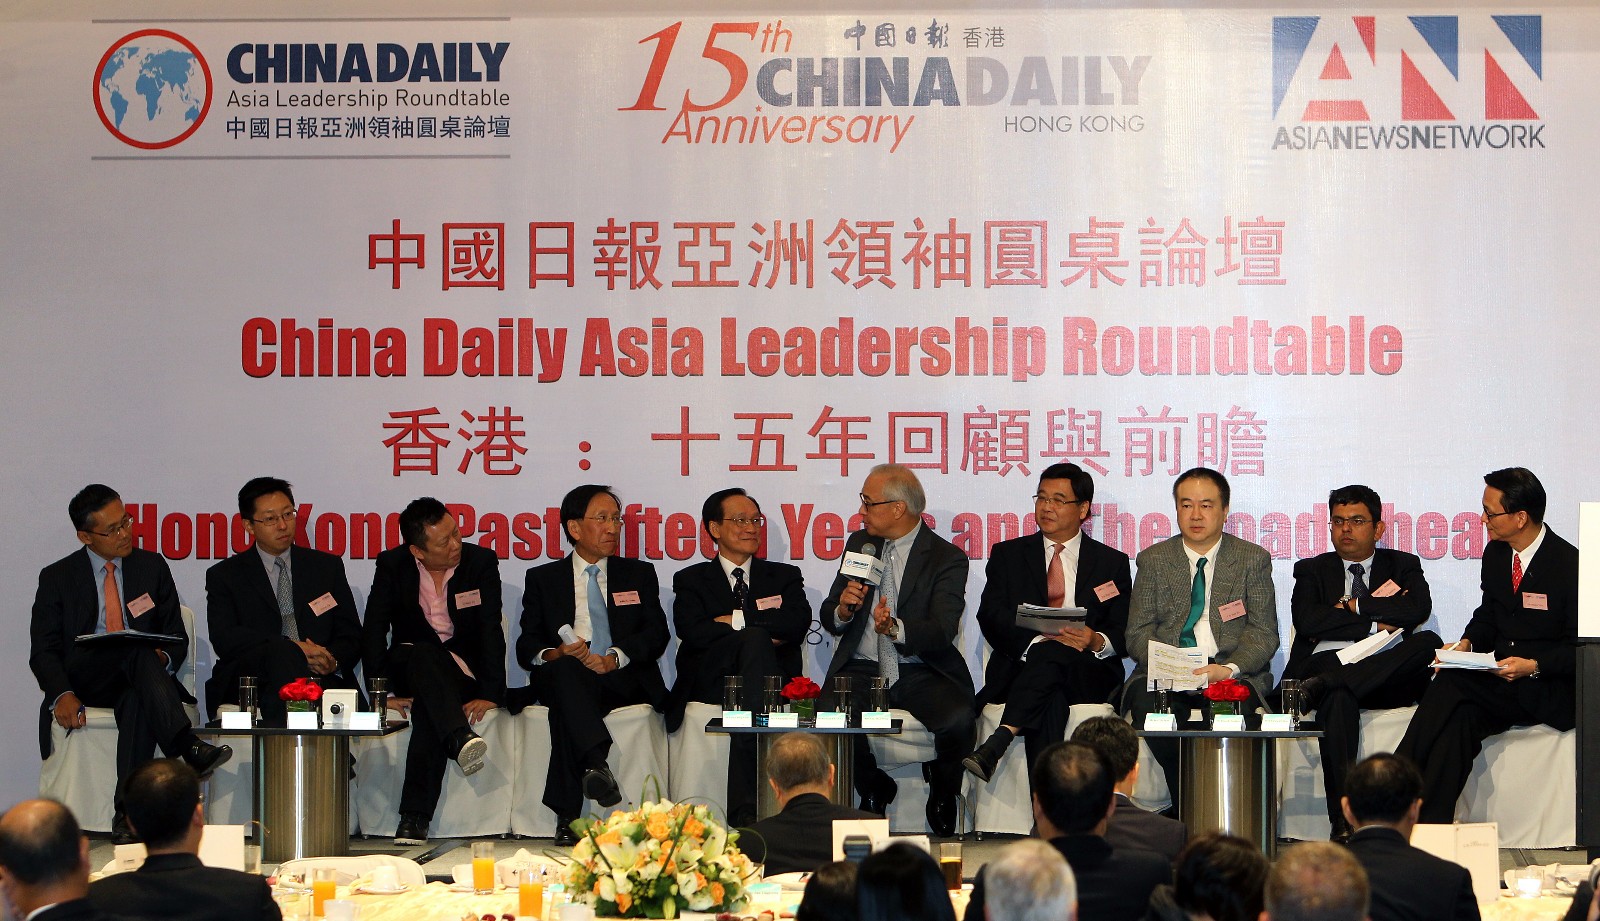 China Daily 15th Anniversary Lucheon Panel on 08 Oct 2012 (CHN)